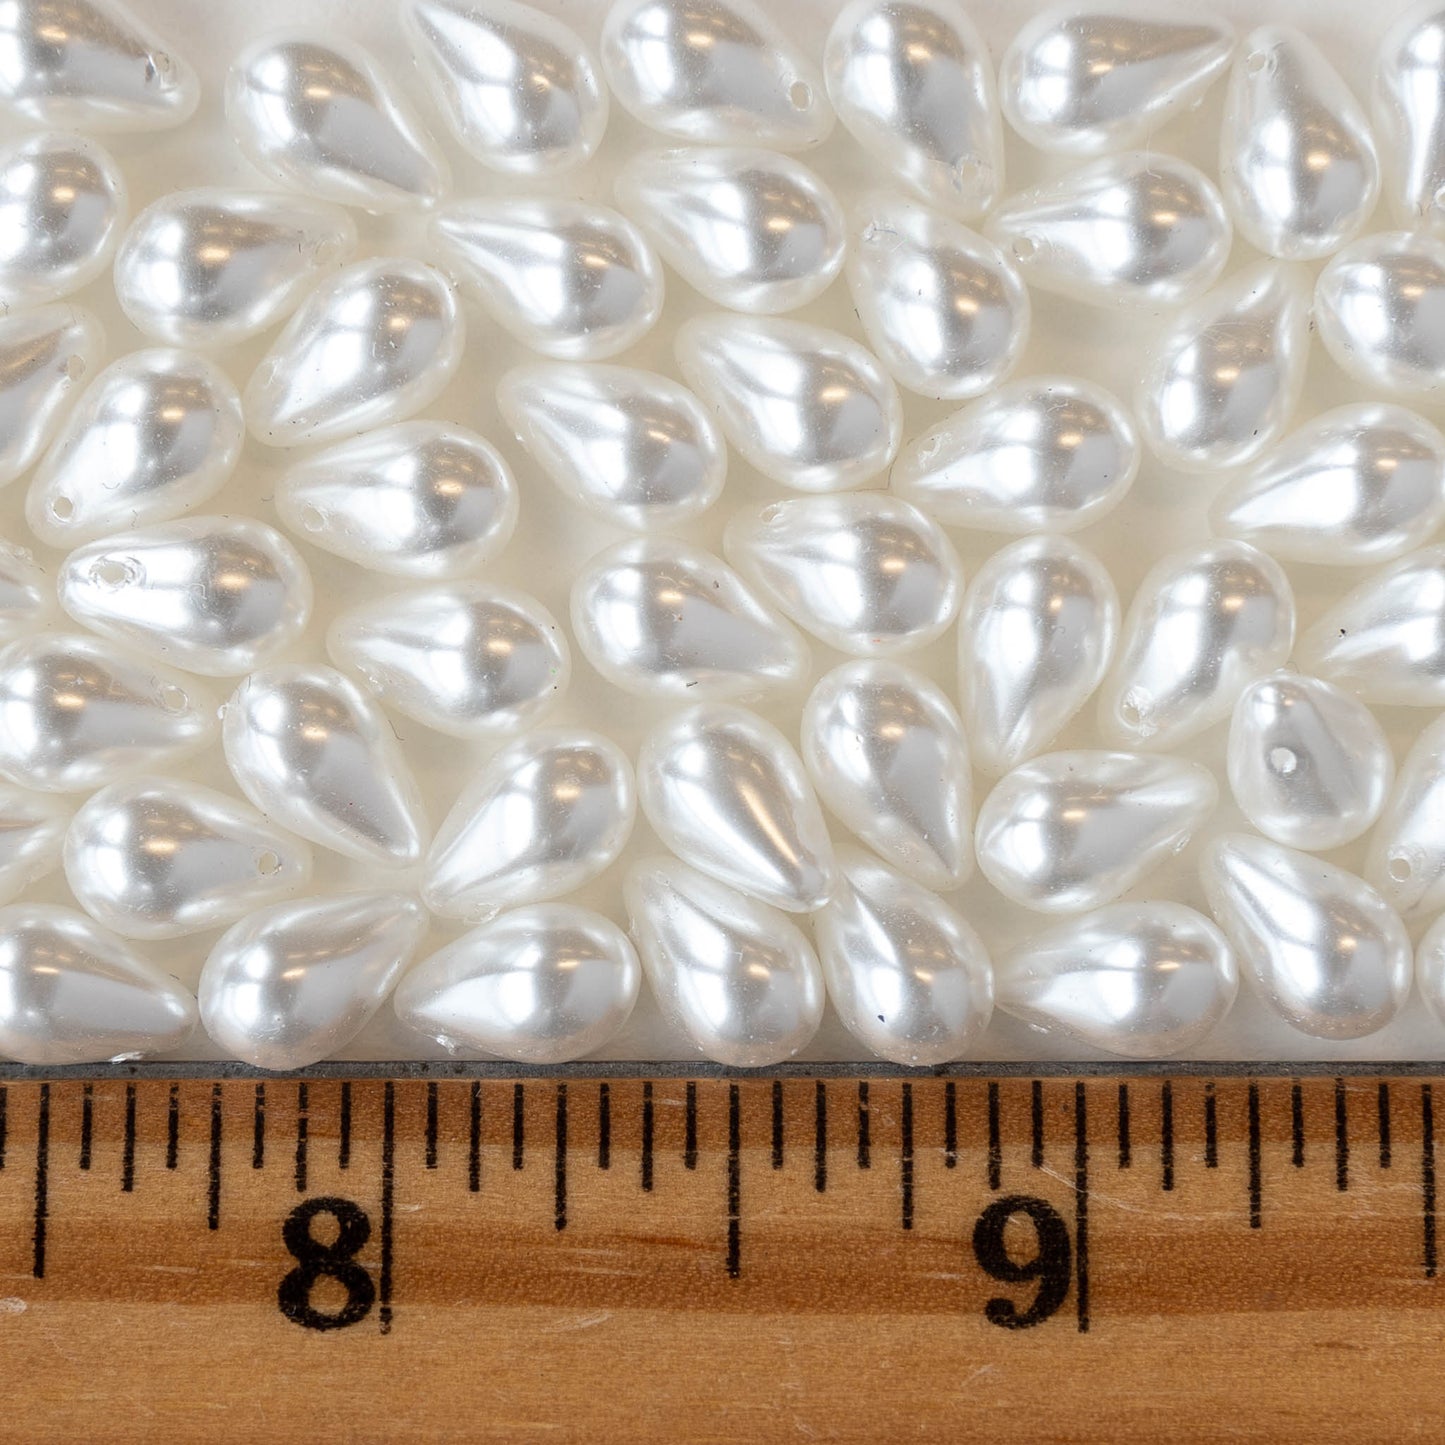 6x9mm Teardrop Beads -  Pearly White - 50 bead